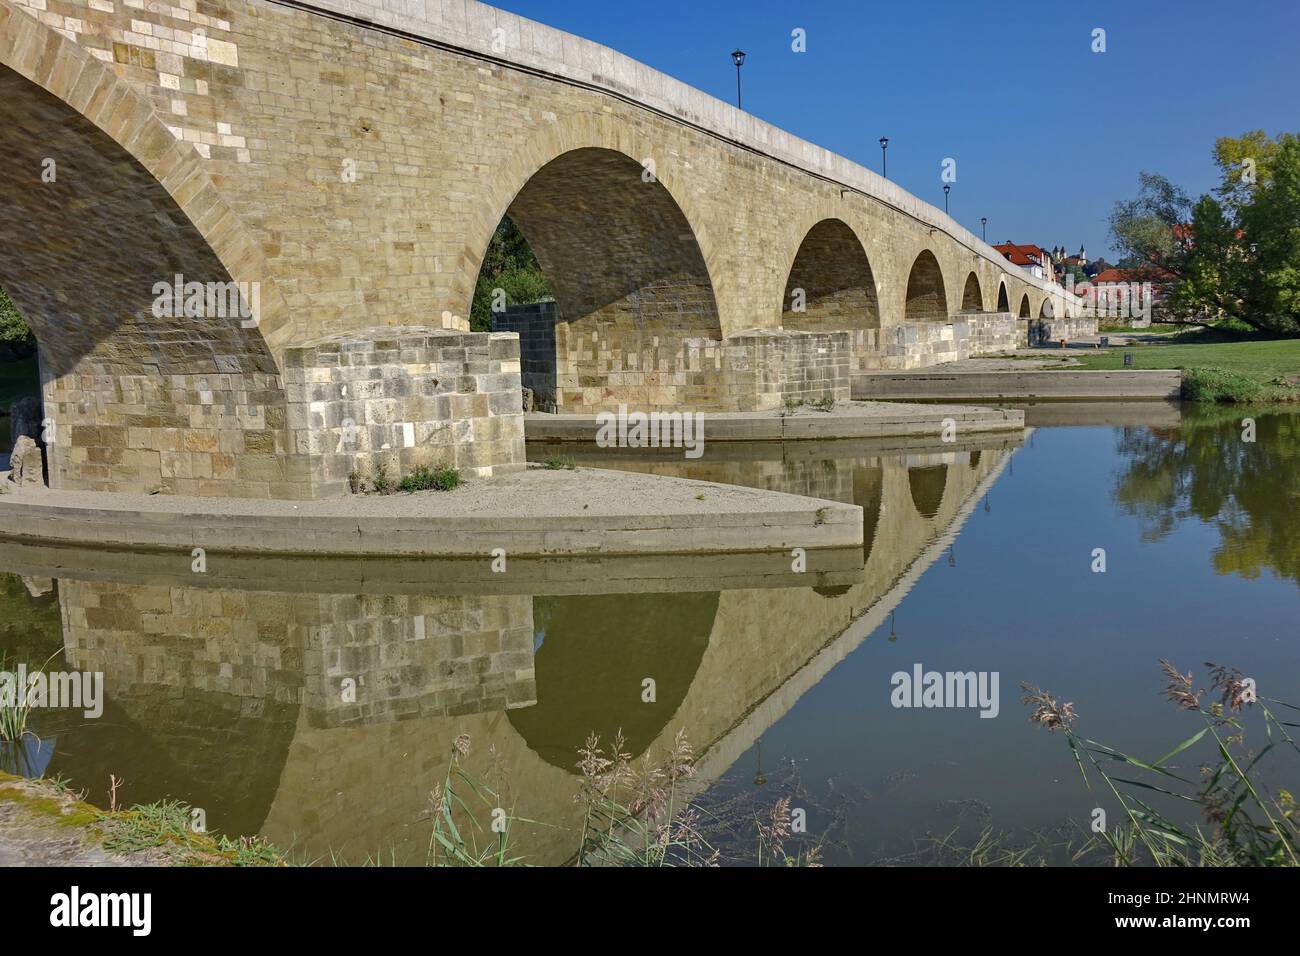 Germany, Bavaria, Regensburg, Oberpfalz, unesco heritage site, stone Bridge, Danube, toursm, trip Stock Photo